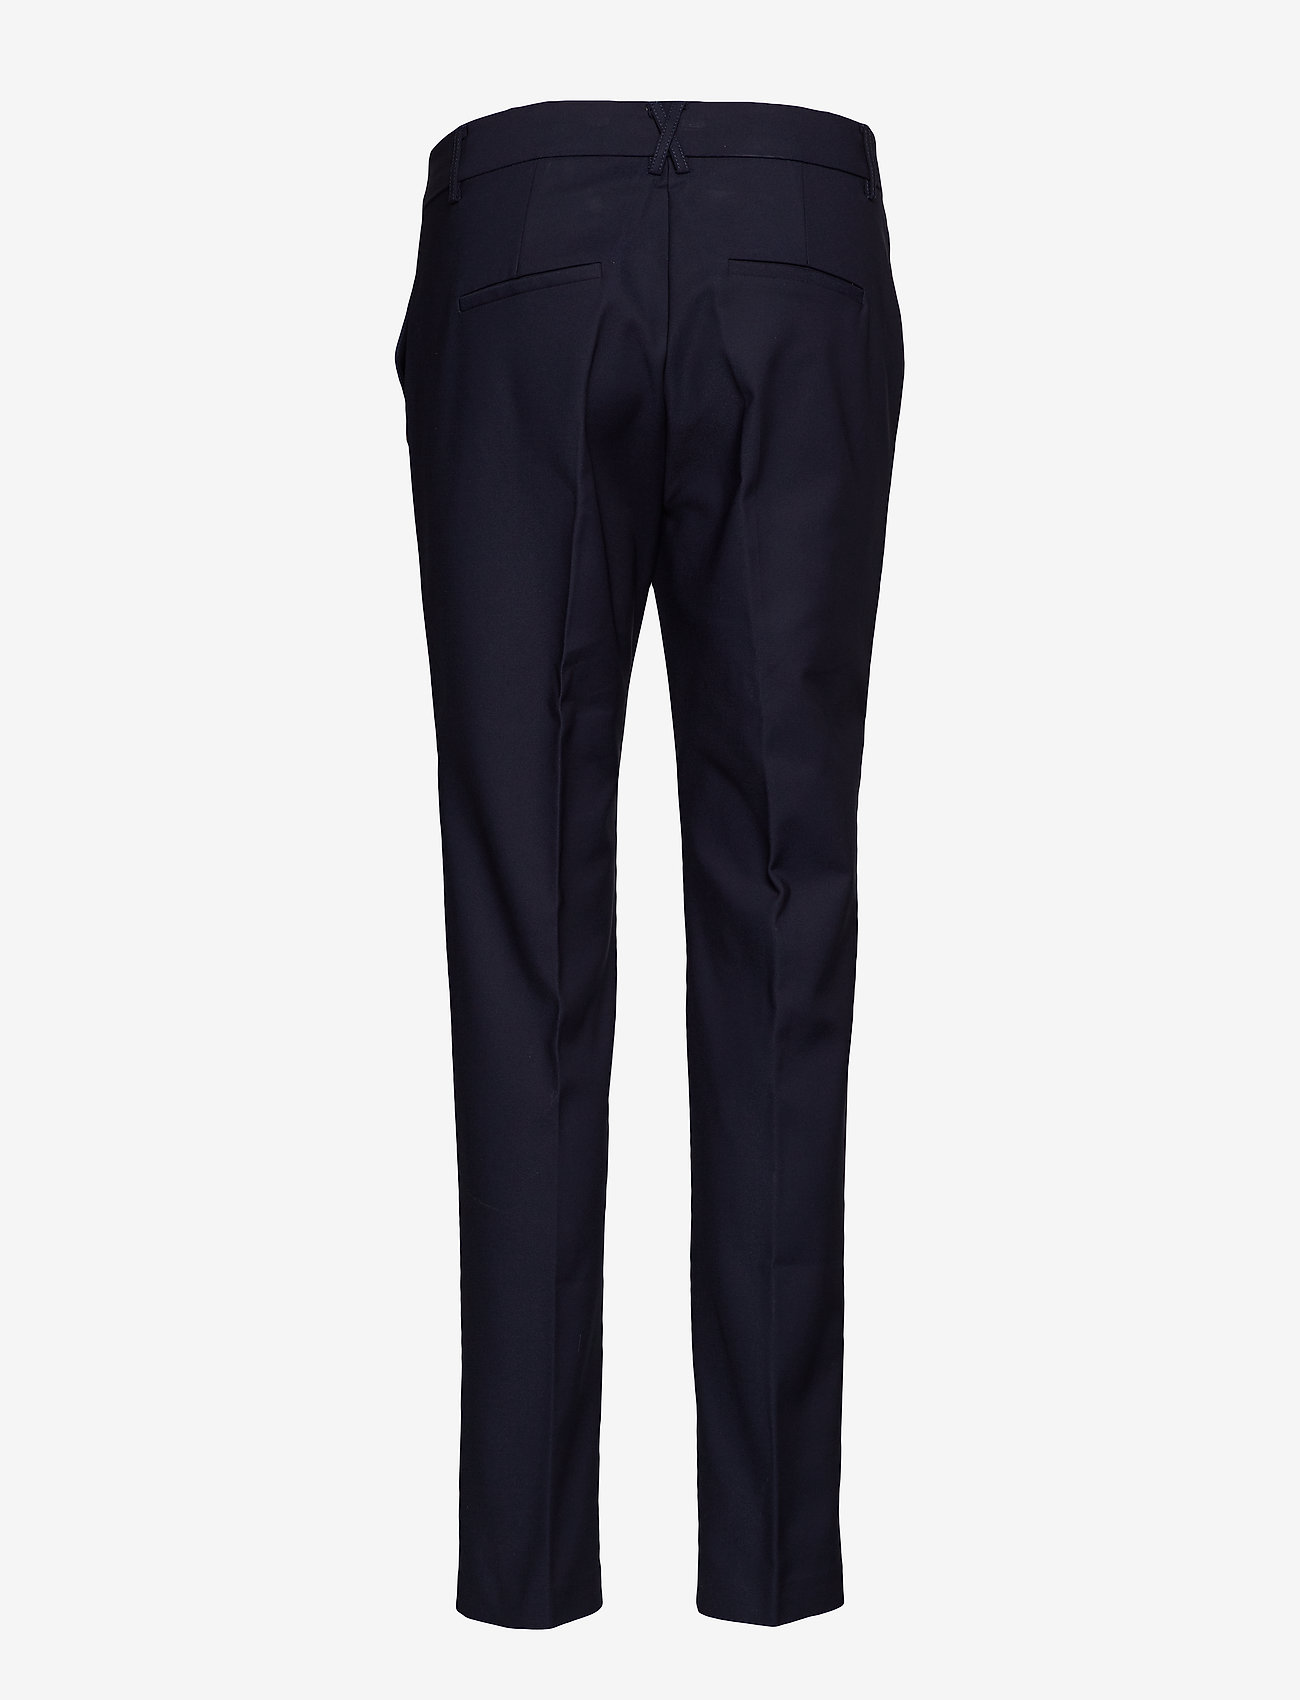 Coster Copenhagen - Pants w. crease - Lucia - slim fit trousers - night sky blue - 1